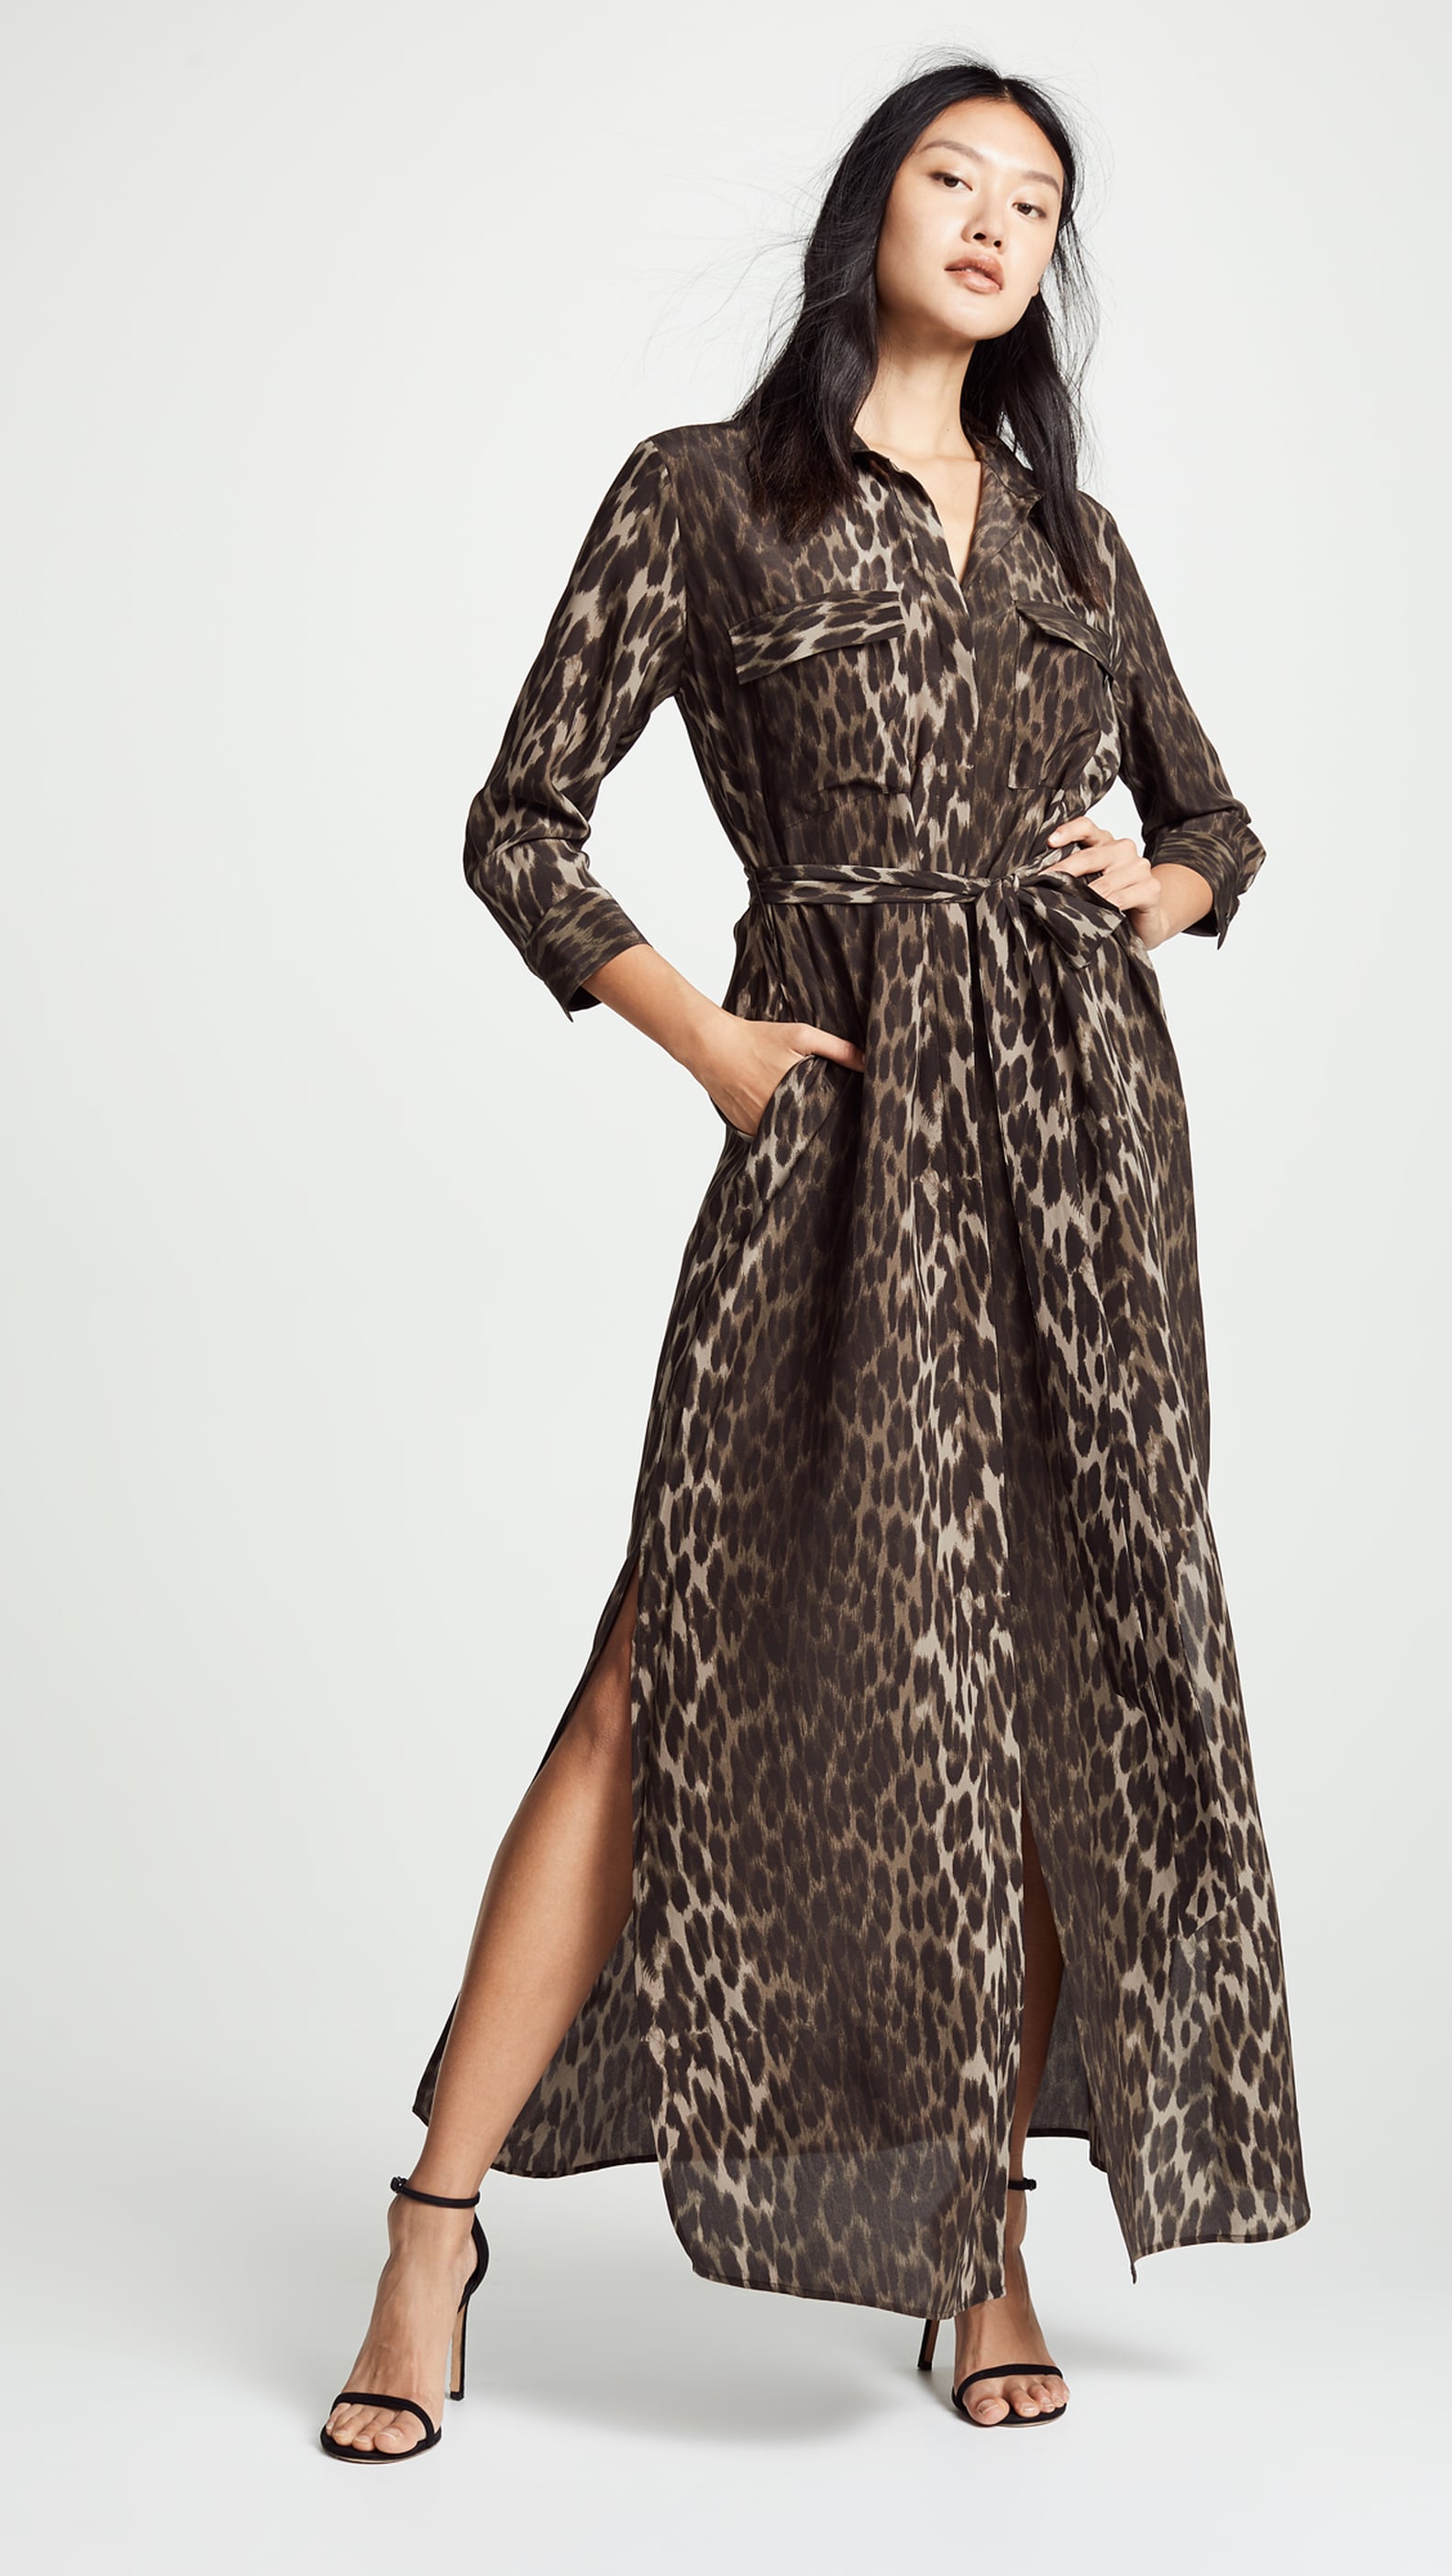 Victoria Beckham's Leopard-Print Dress September 2018 | POPSUGAR Fashion